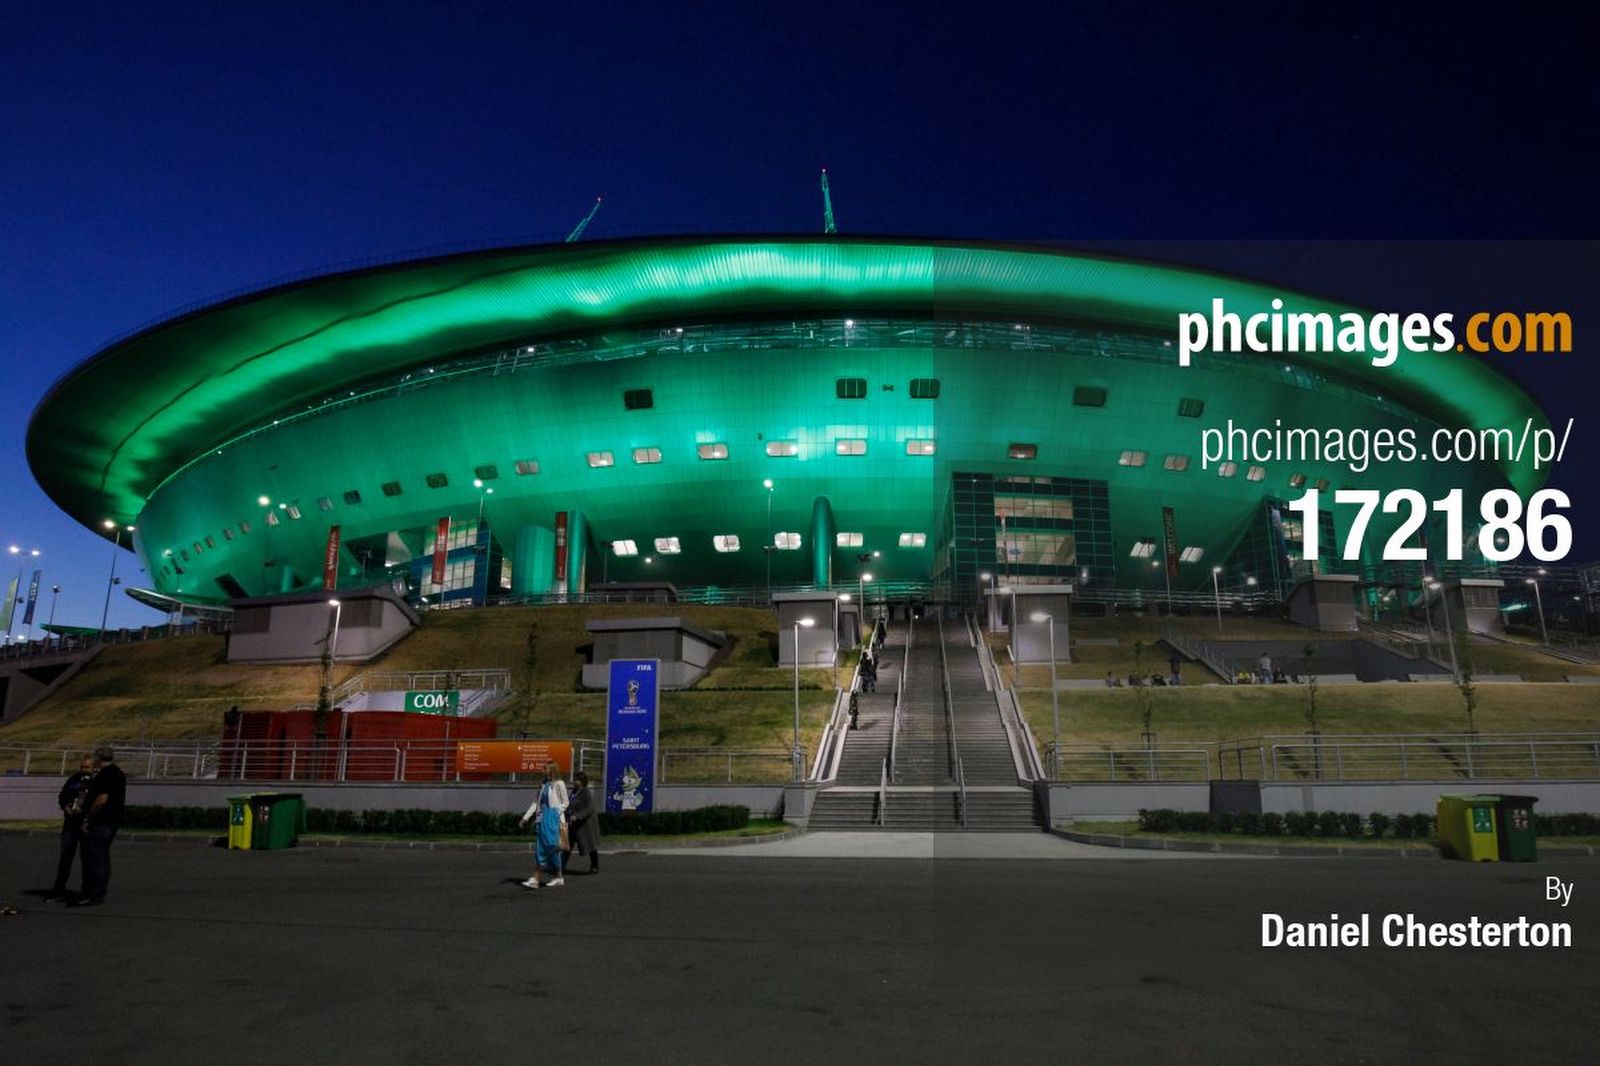 The Saint Petersburg Stadium lit up after the match